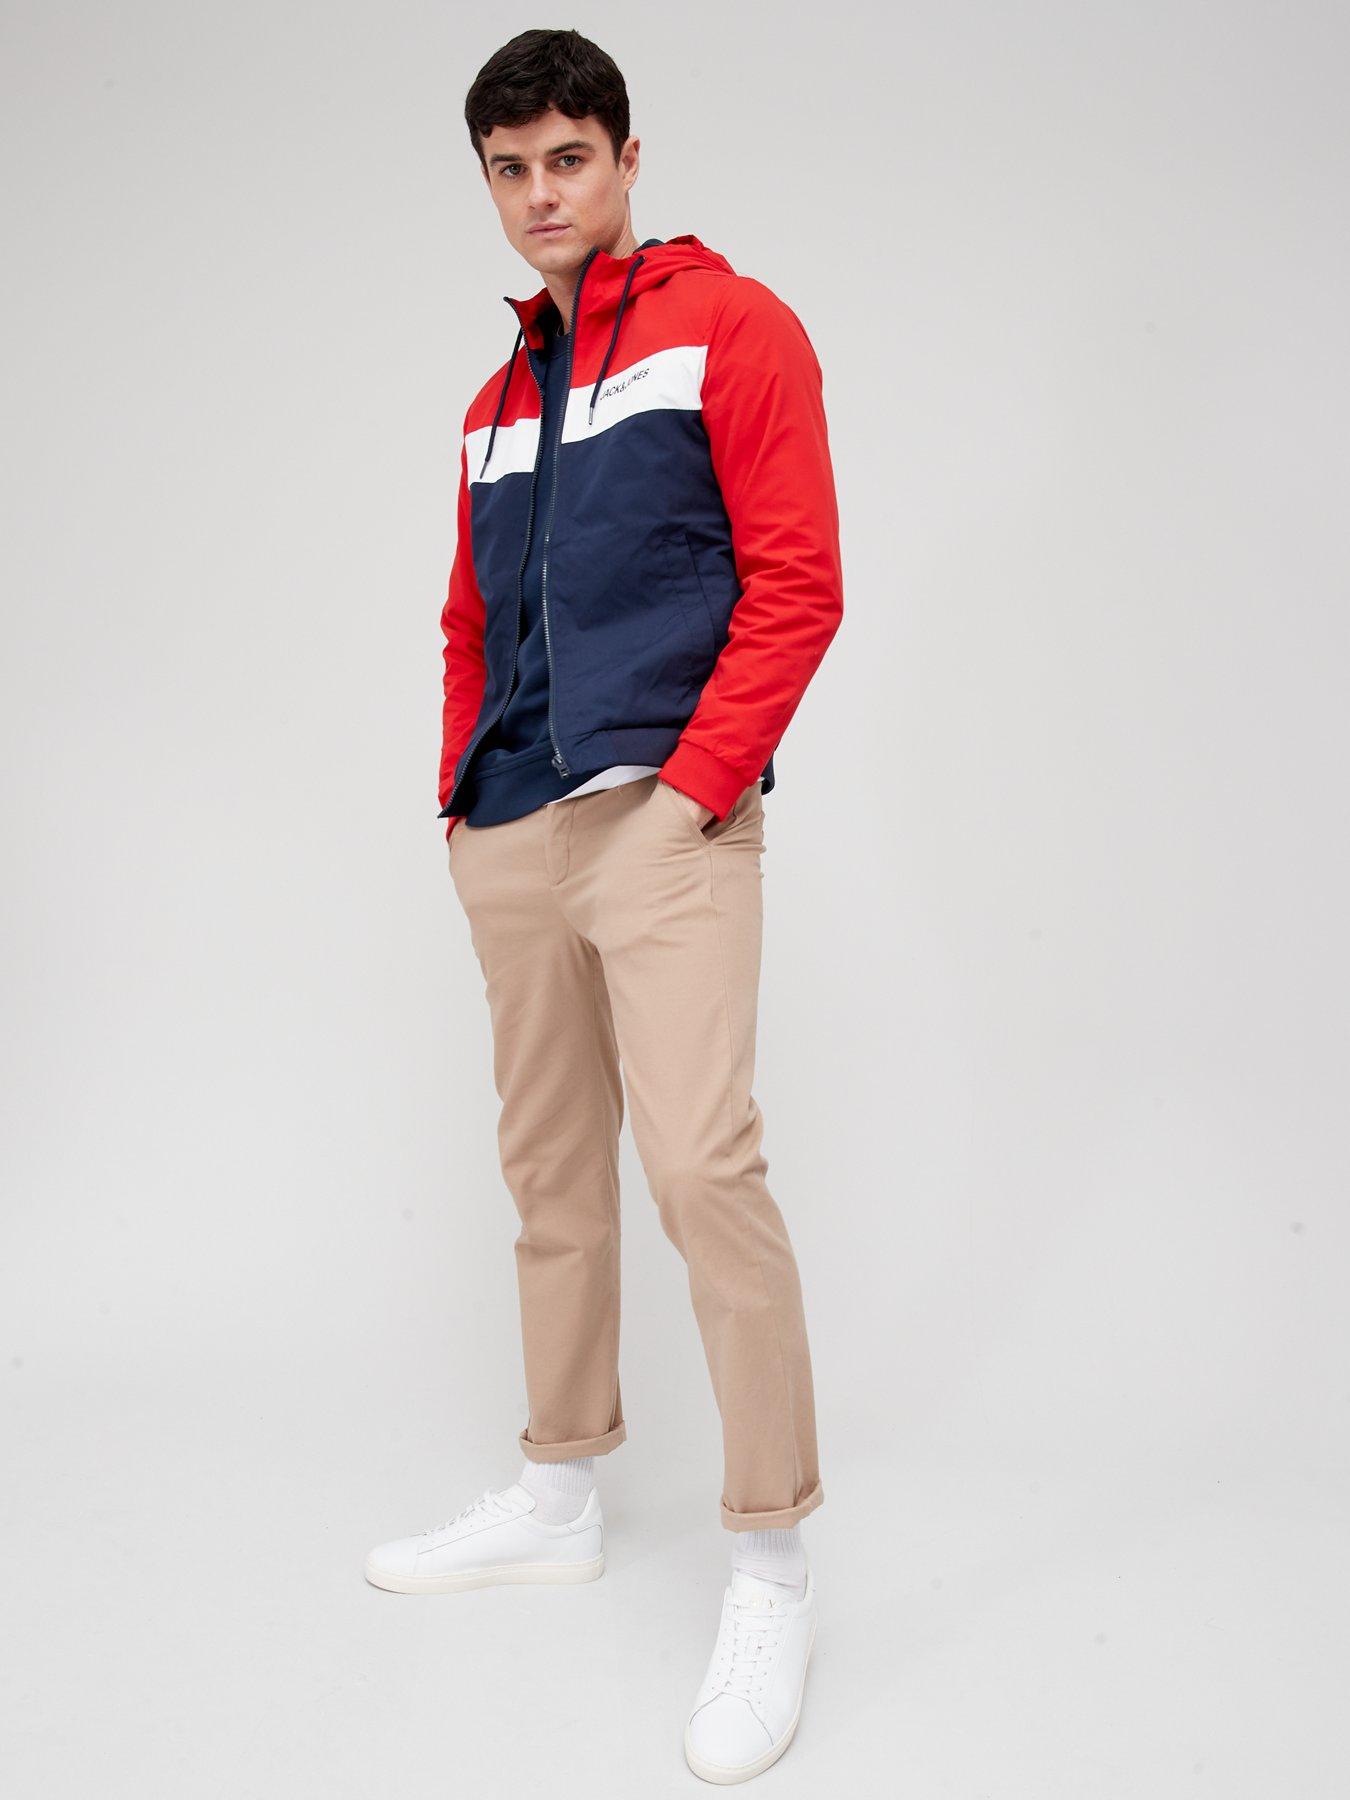  Colourblock Zip Through Hooded Jacket - Red/White/Navy